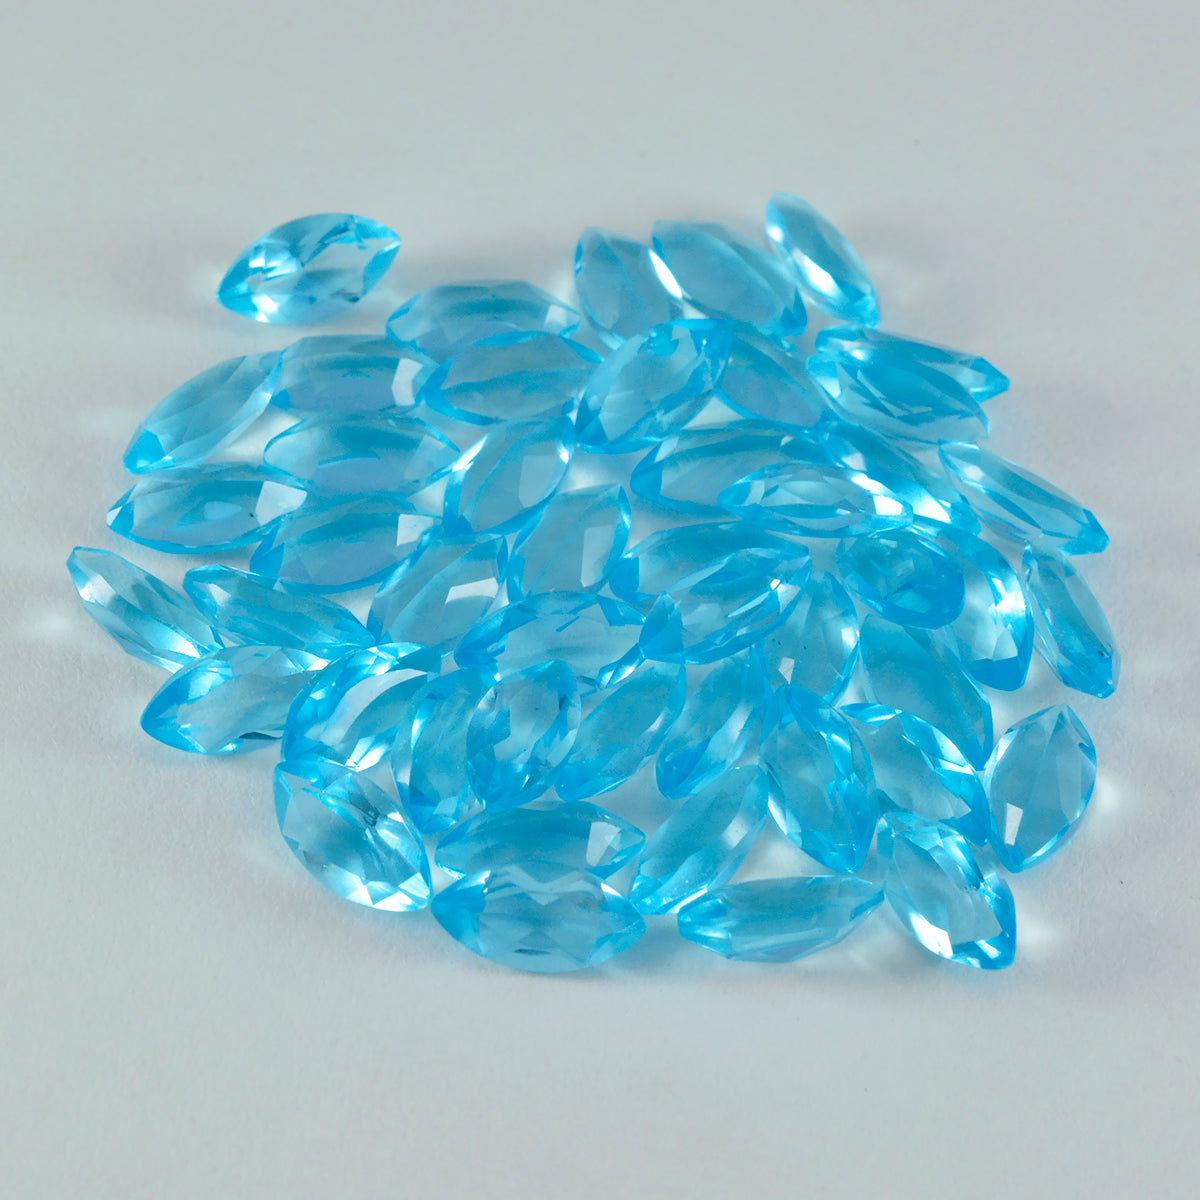 Riyogems 1PC Blue Topaz CZ Faceted 5x10 mm Marquise Shape amazing Quality Gems